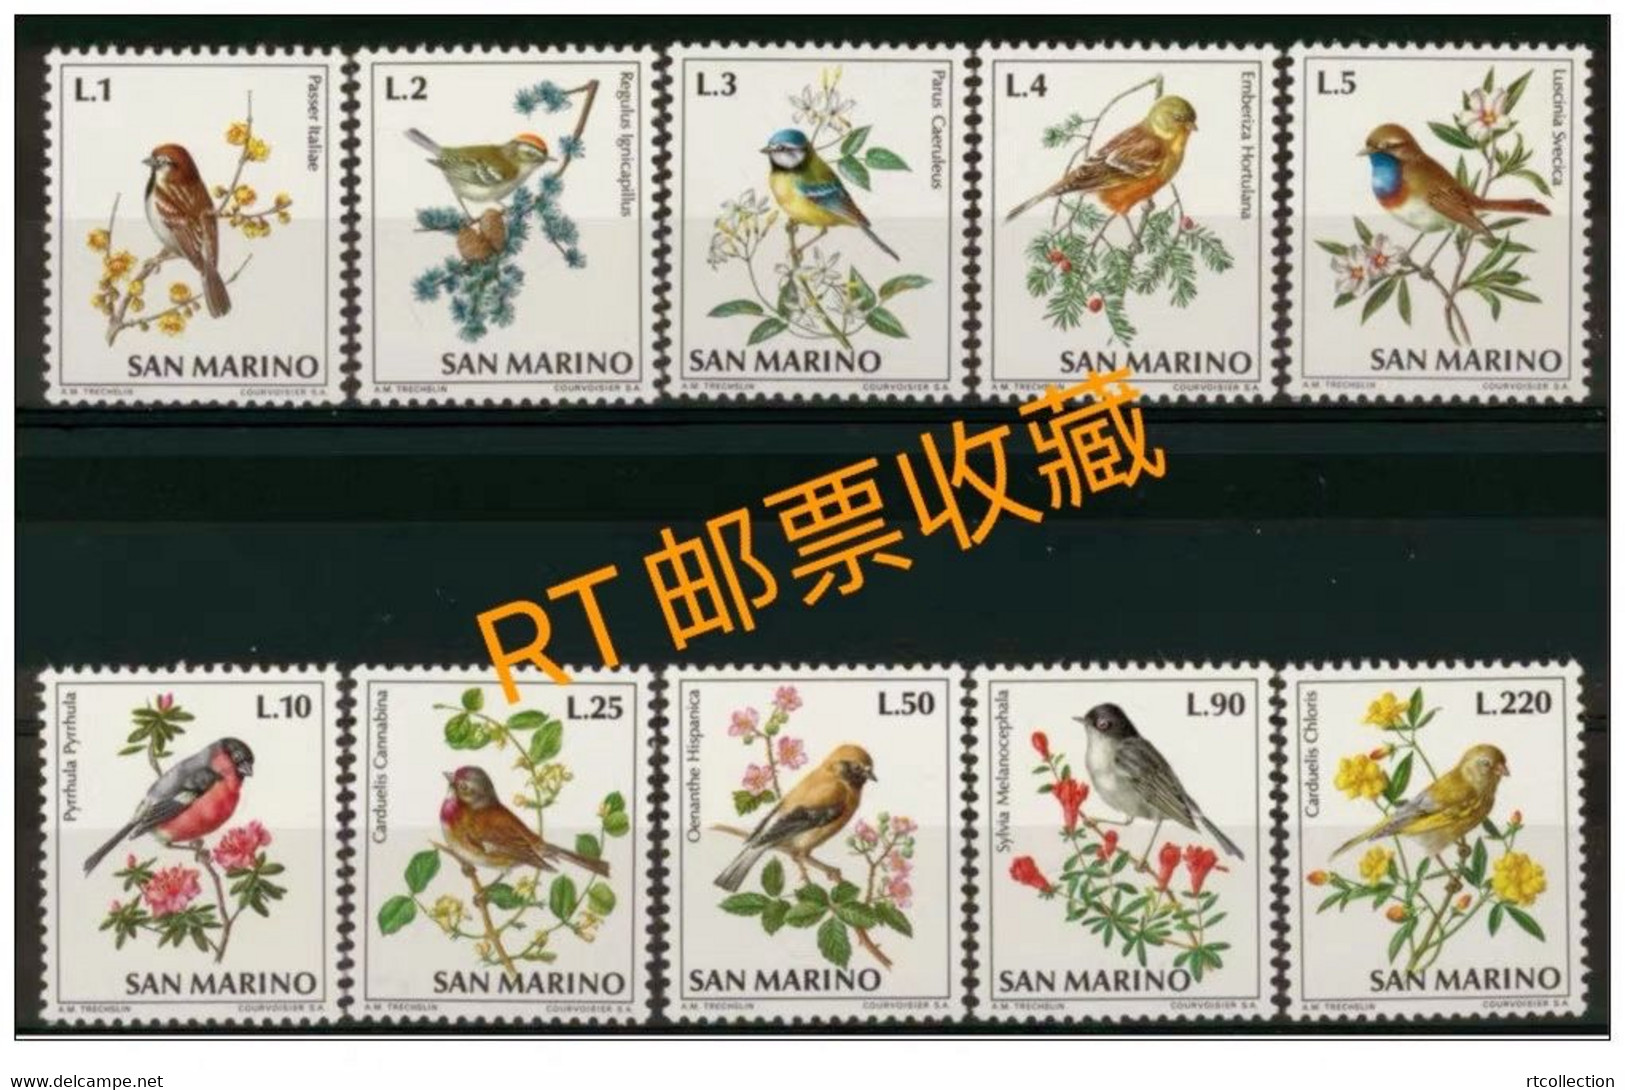 San Marino 1972 Song Birds Nature Flowers Plants Bird Flora Plant Fauna Songbirds Sparrows Stamps MNH Scott 777-786 - Spatzen